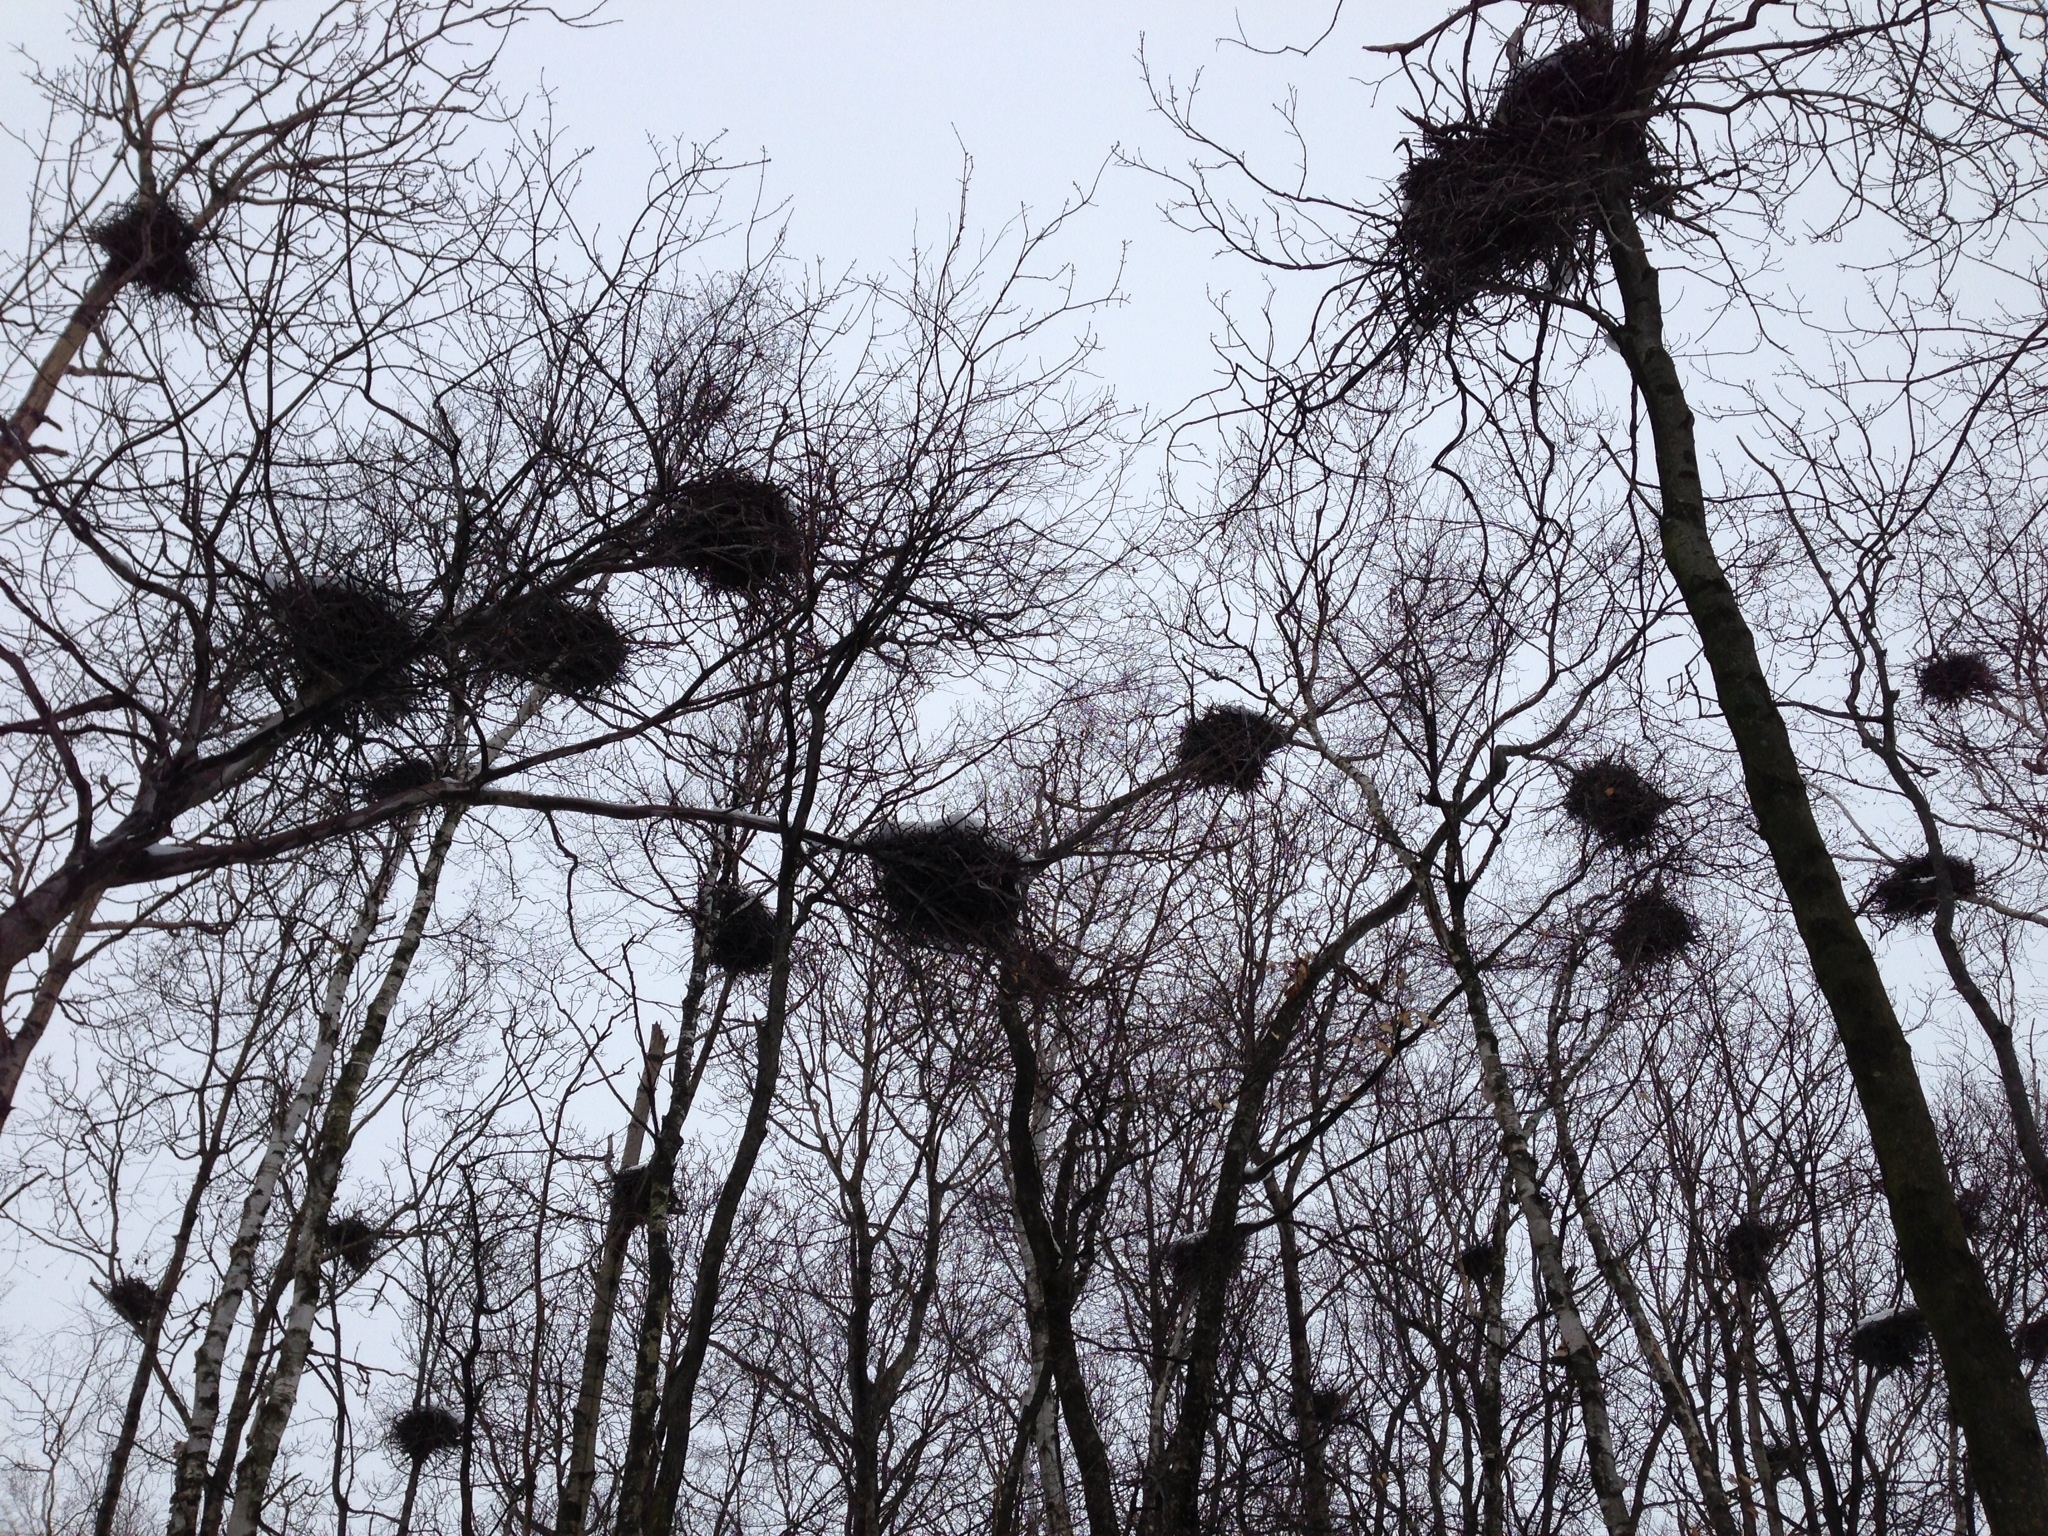 heron nests